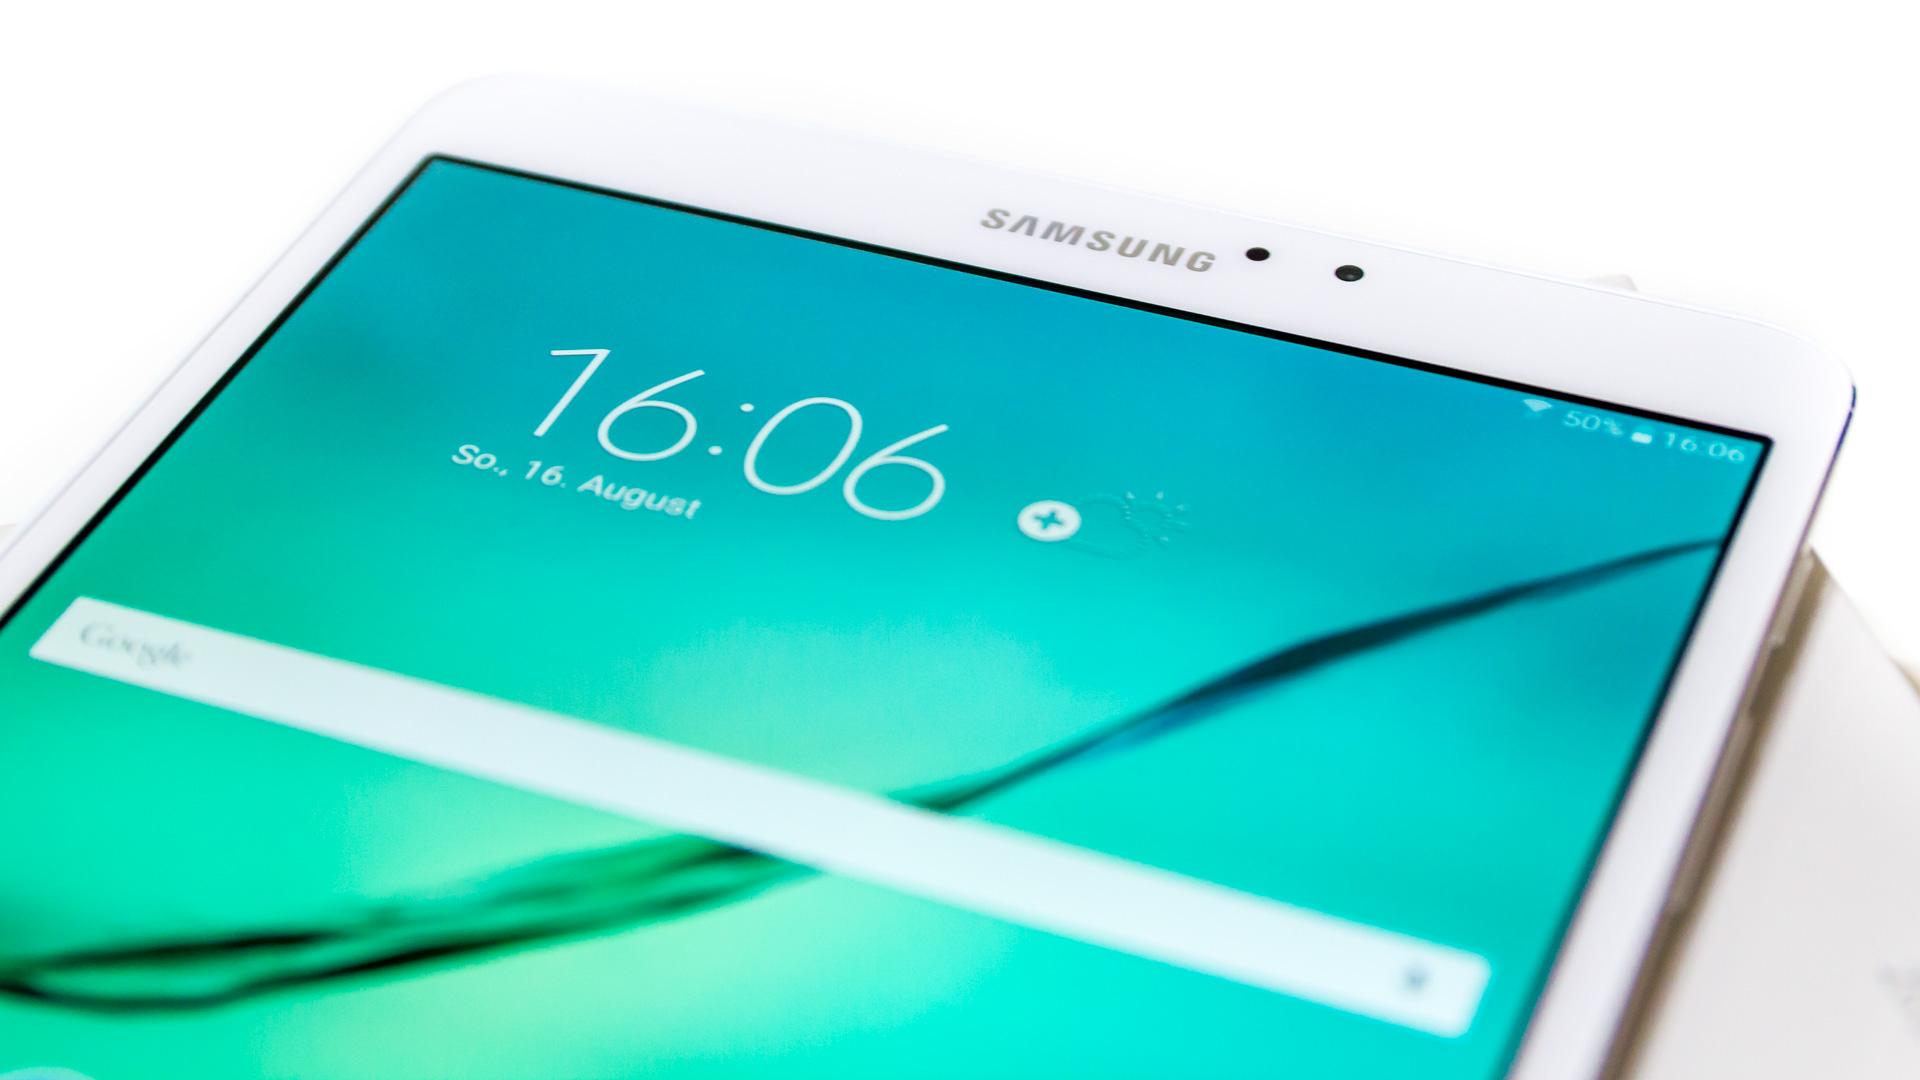 Samsung Galaxy Tab S2 Display